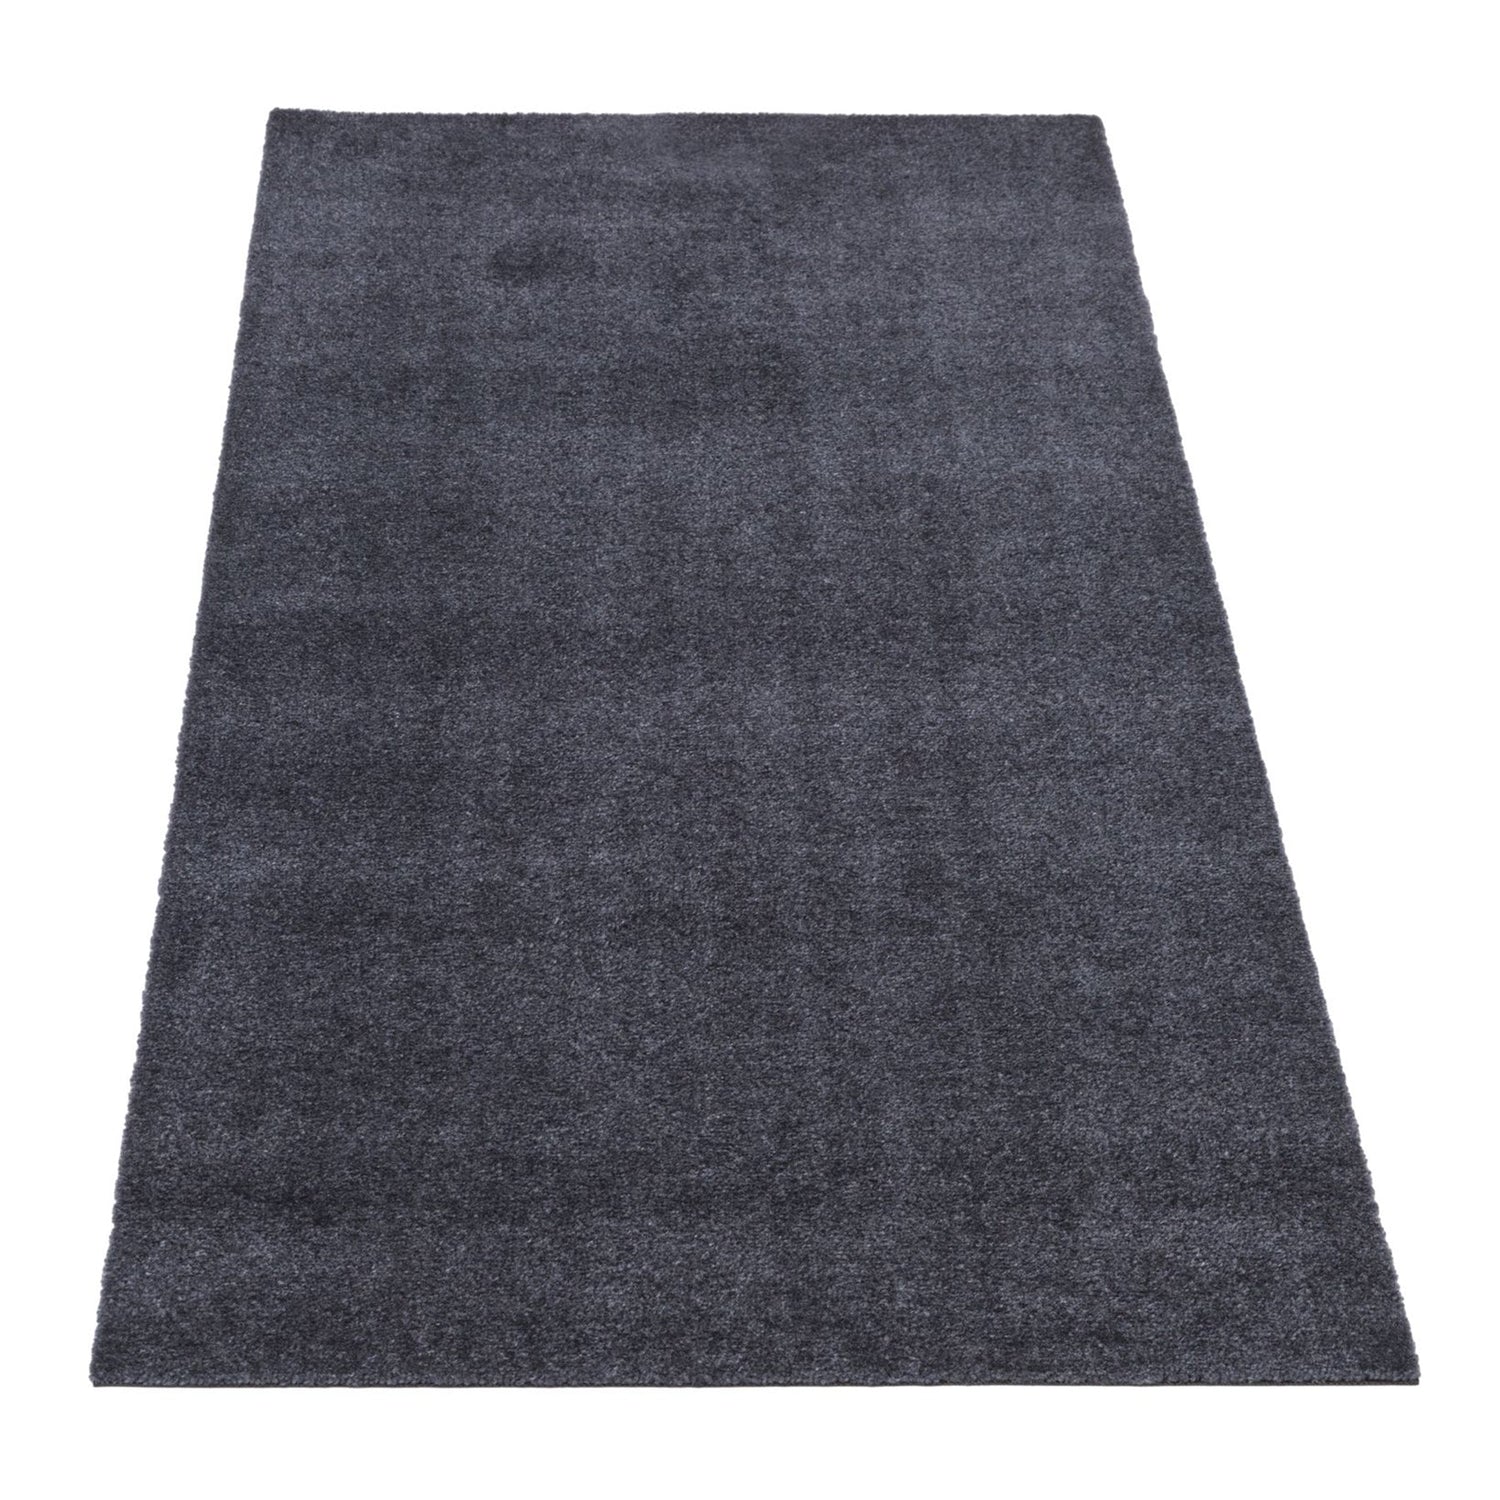 Blanket/had 67 x 150 cm - uni color/gray